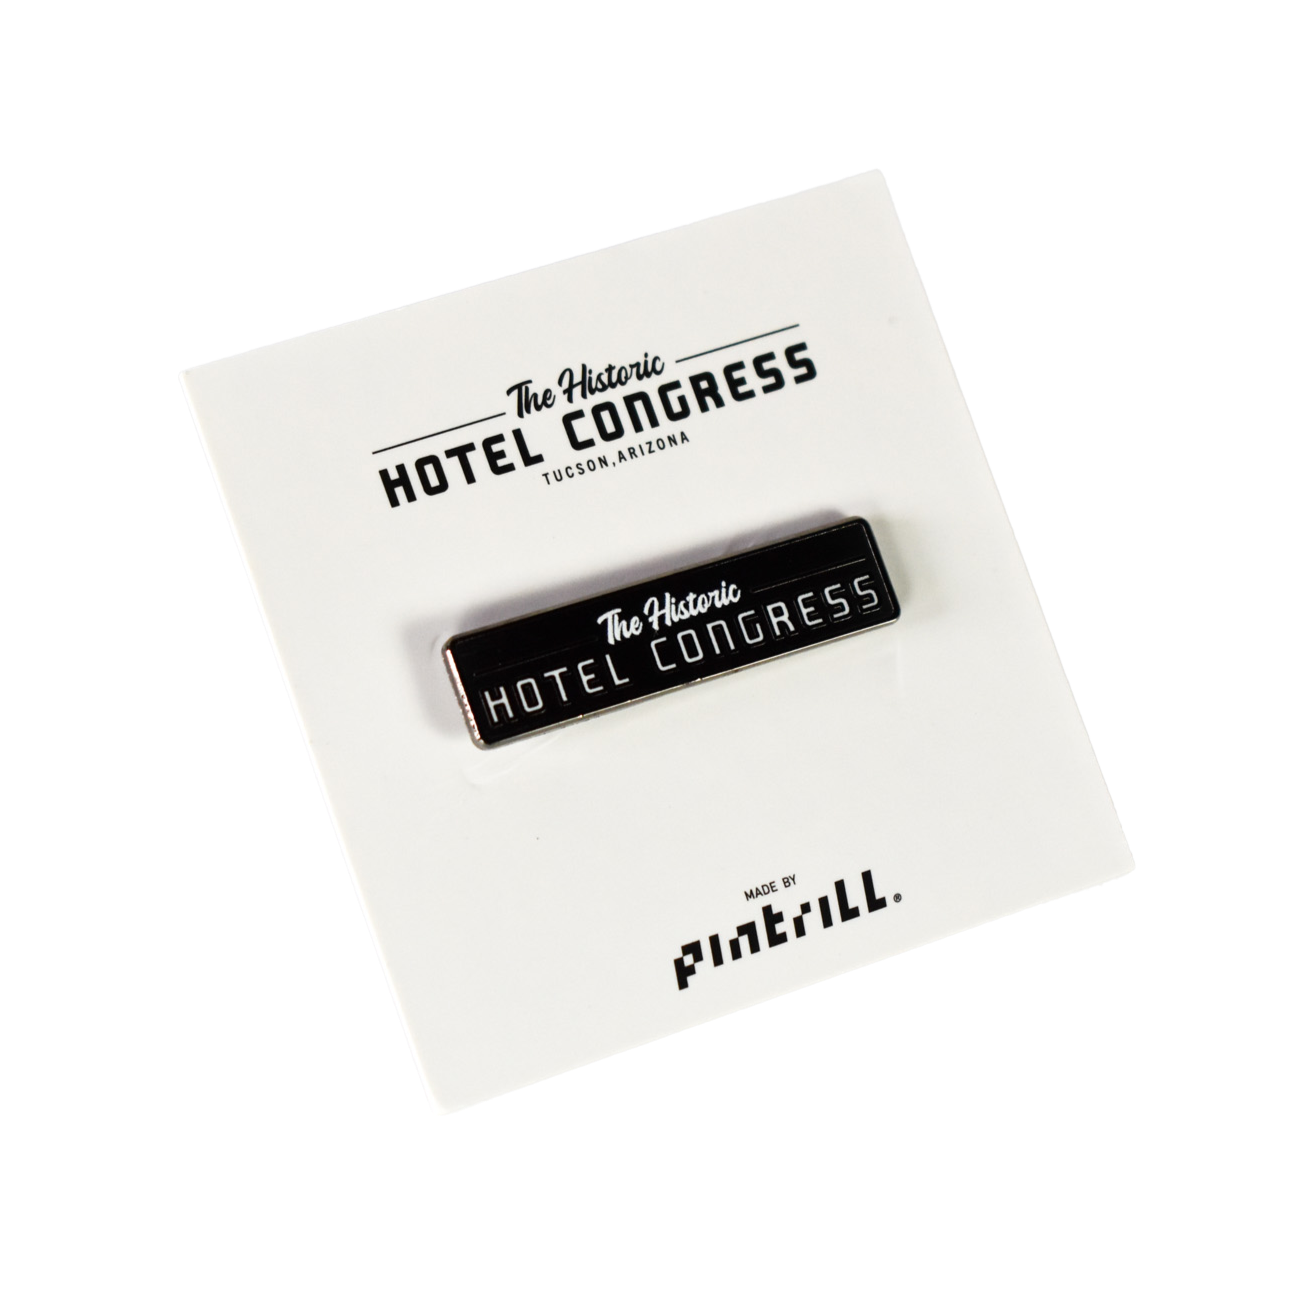 Historic Hotel Congress Pin